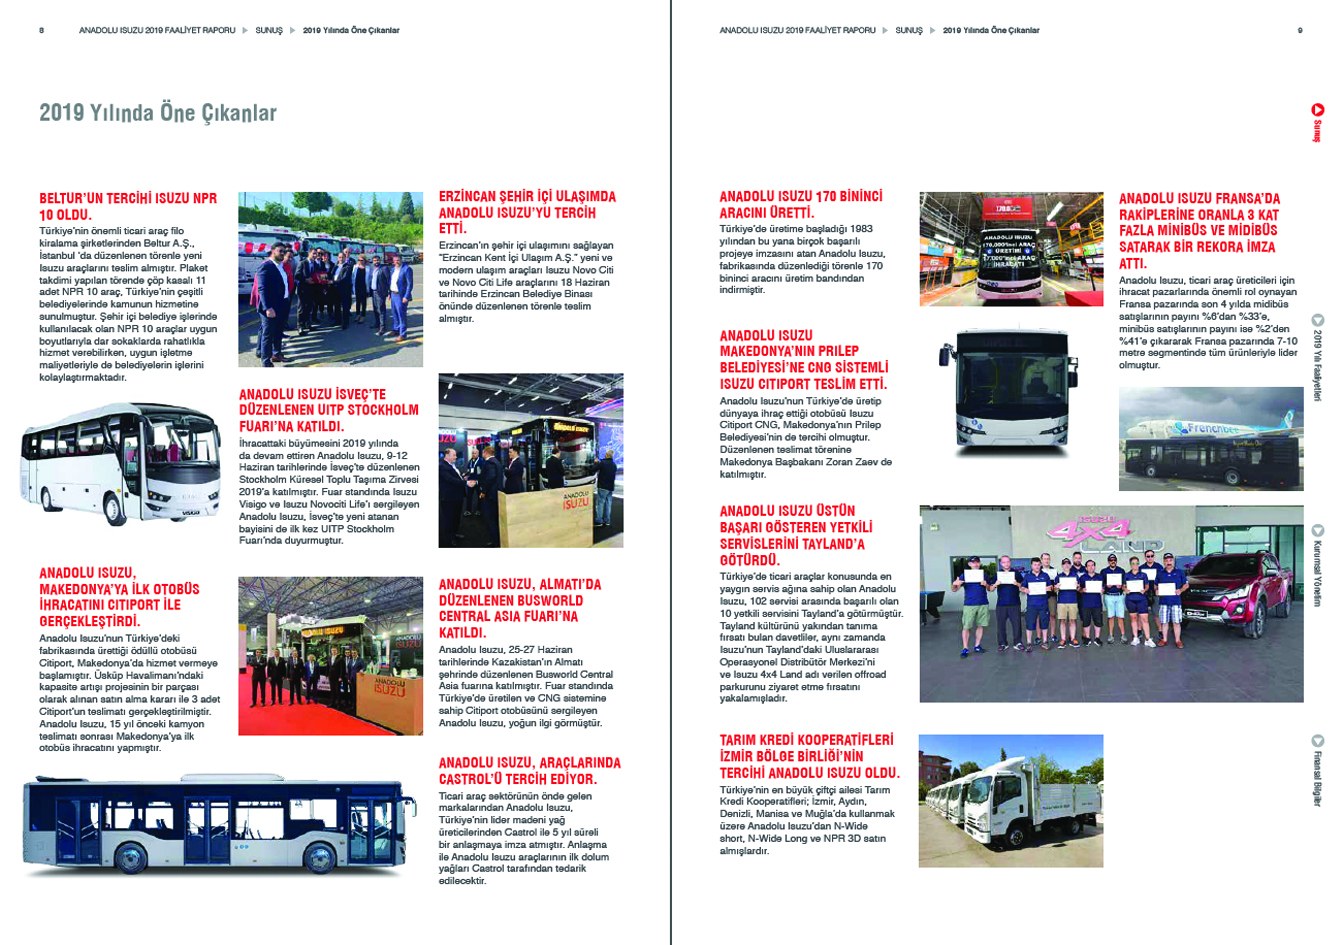 ANADOLU ISUZU / 2019 Faaliyet Raporu / 2019 Annual Report